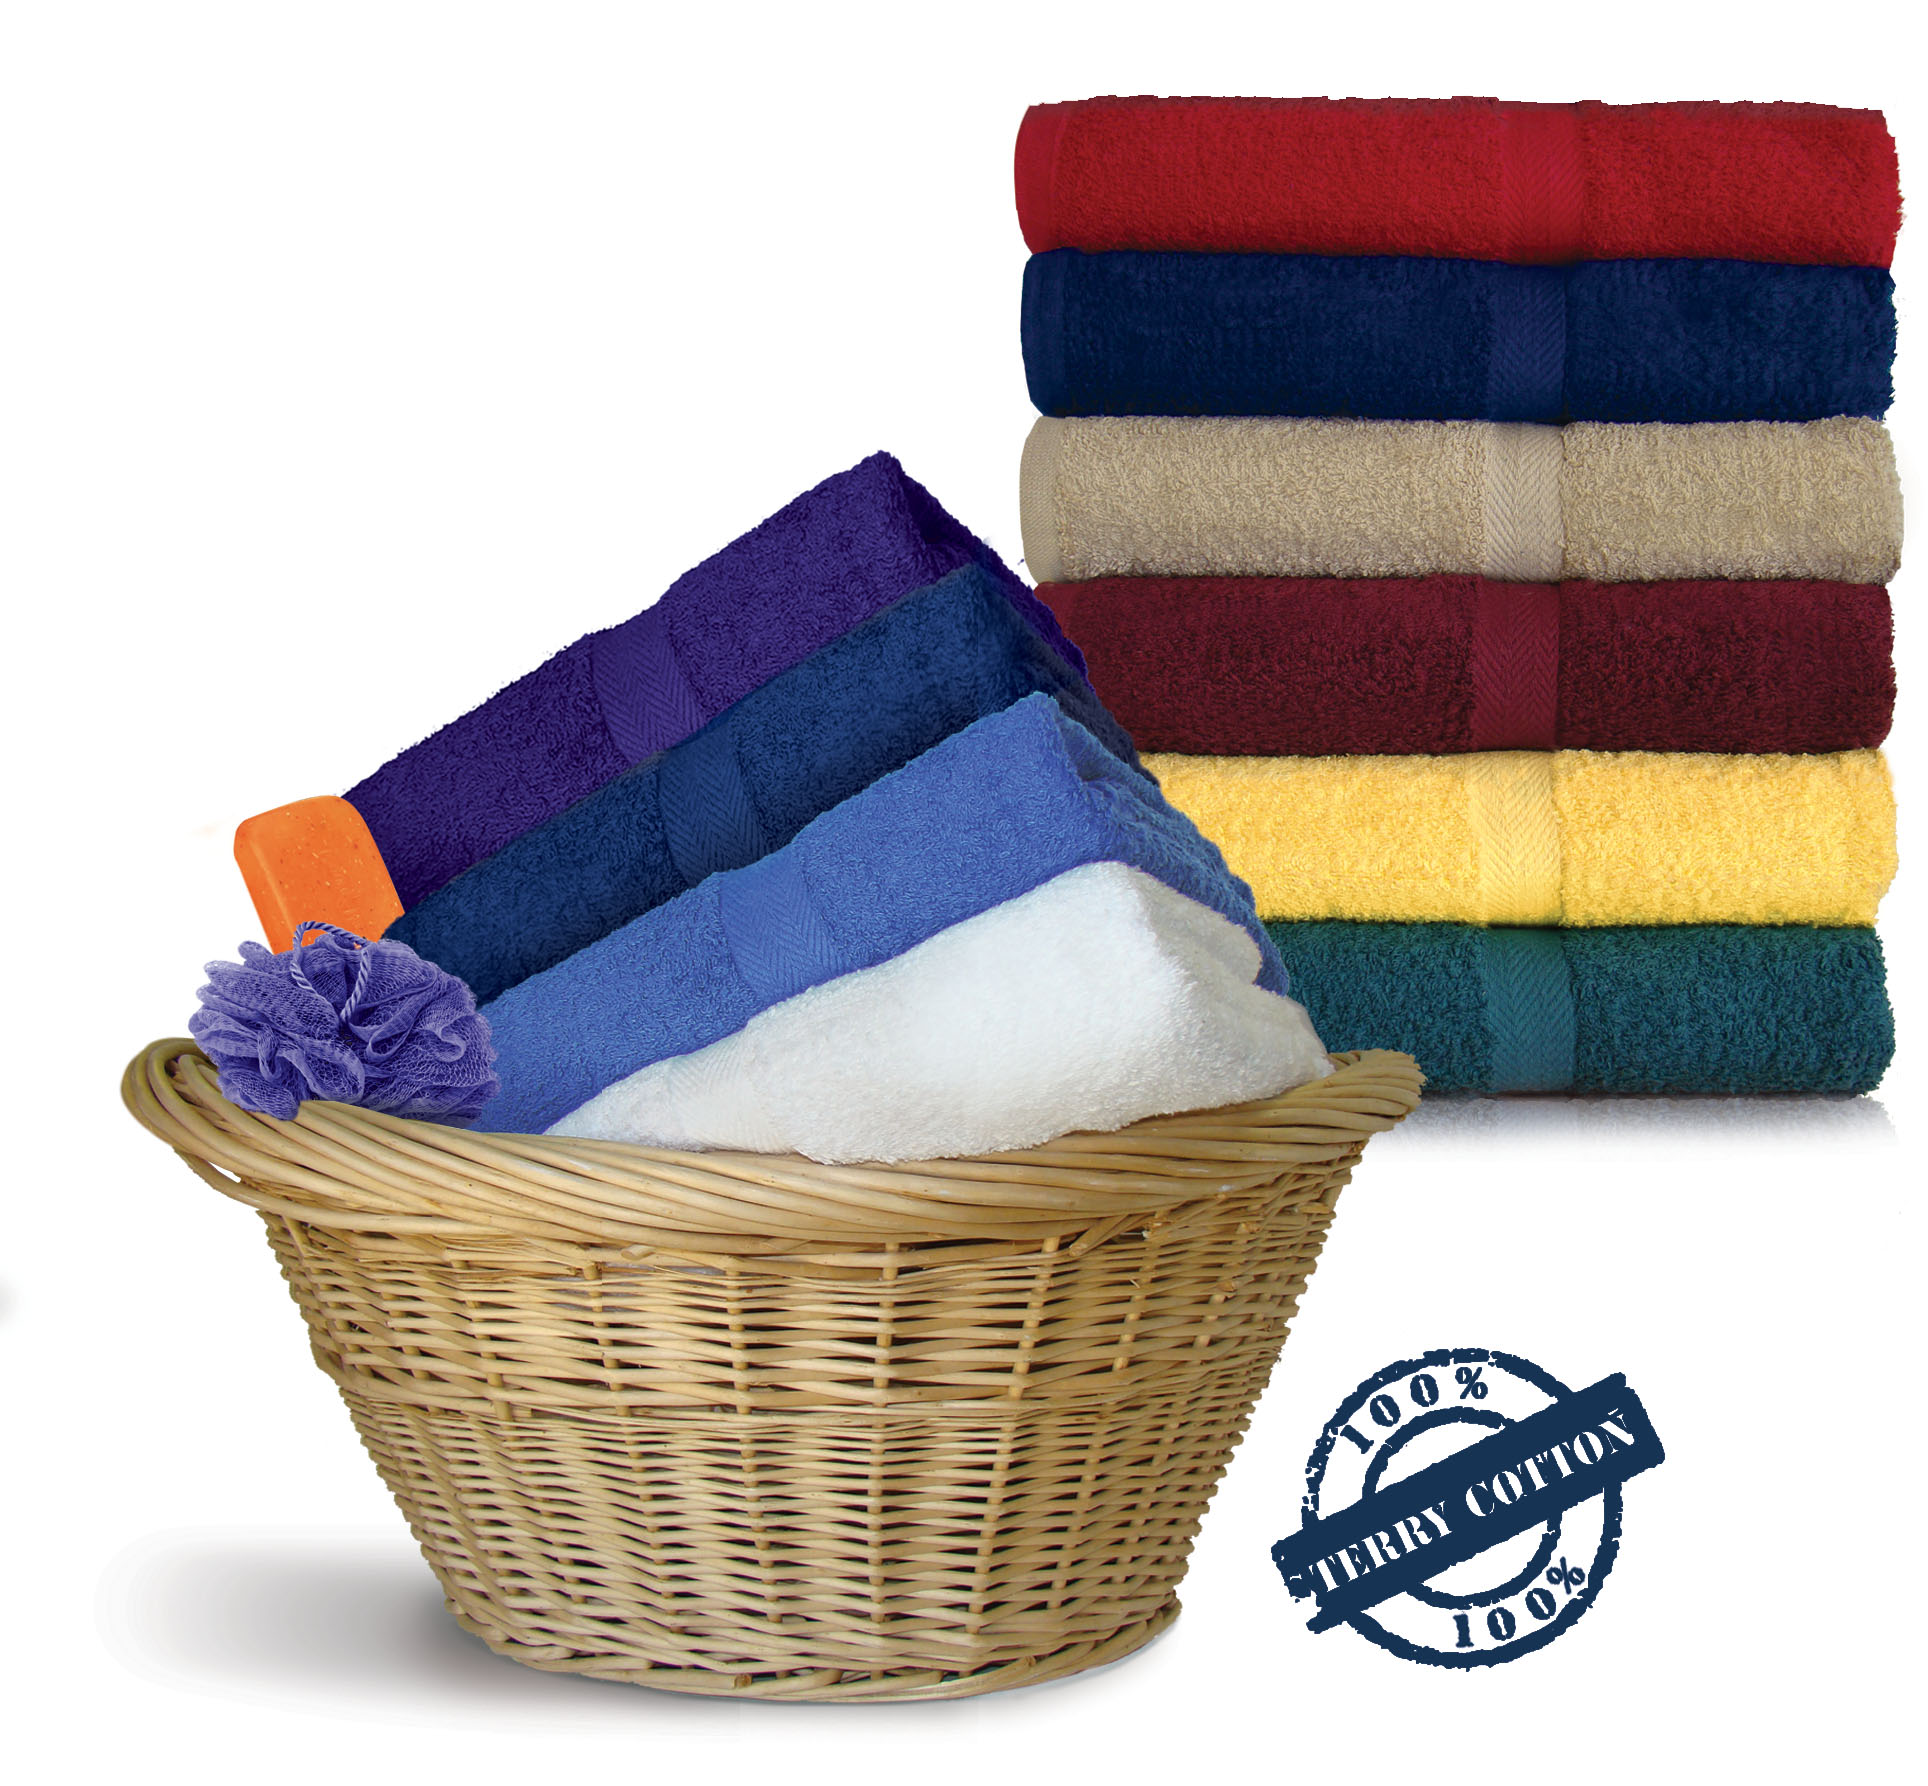 30x52 Shuttleless Loom Bath Towels by Royal Comfort, 14.0 Lbs per dz, Combed Cotton. 24 pcs per case.